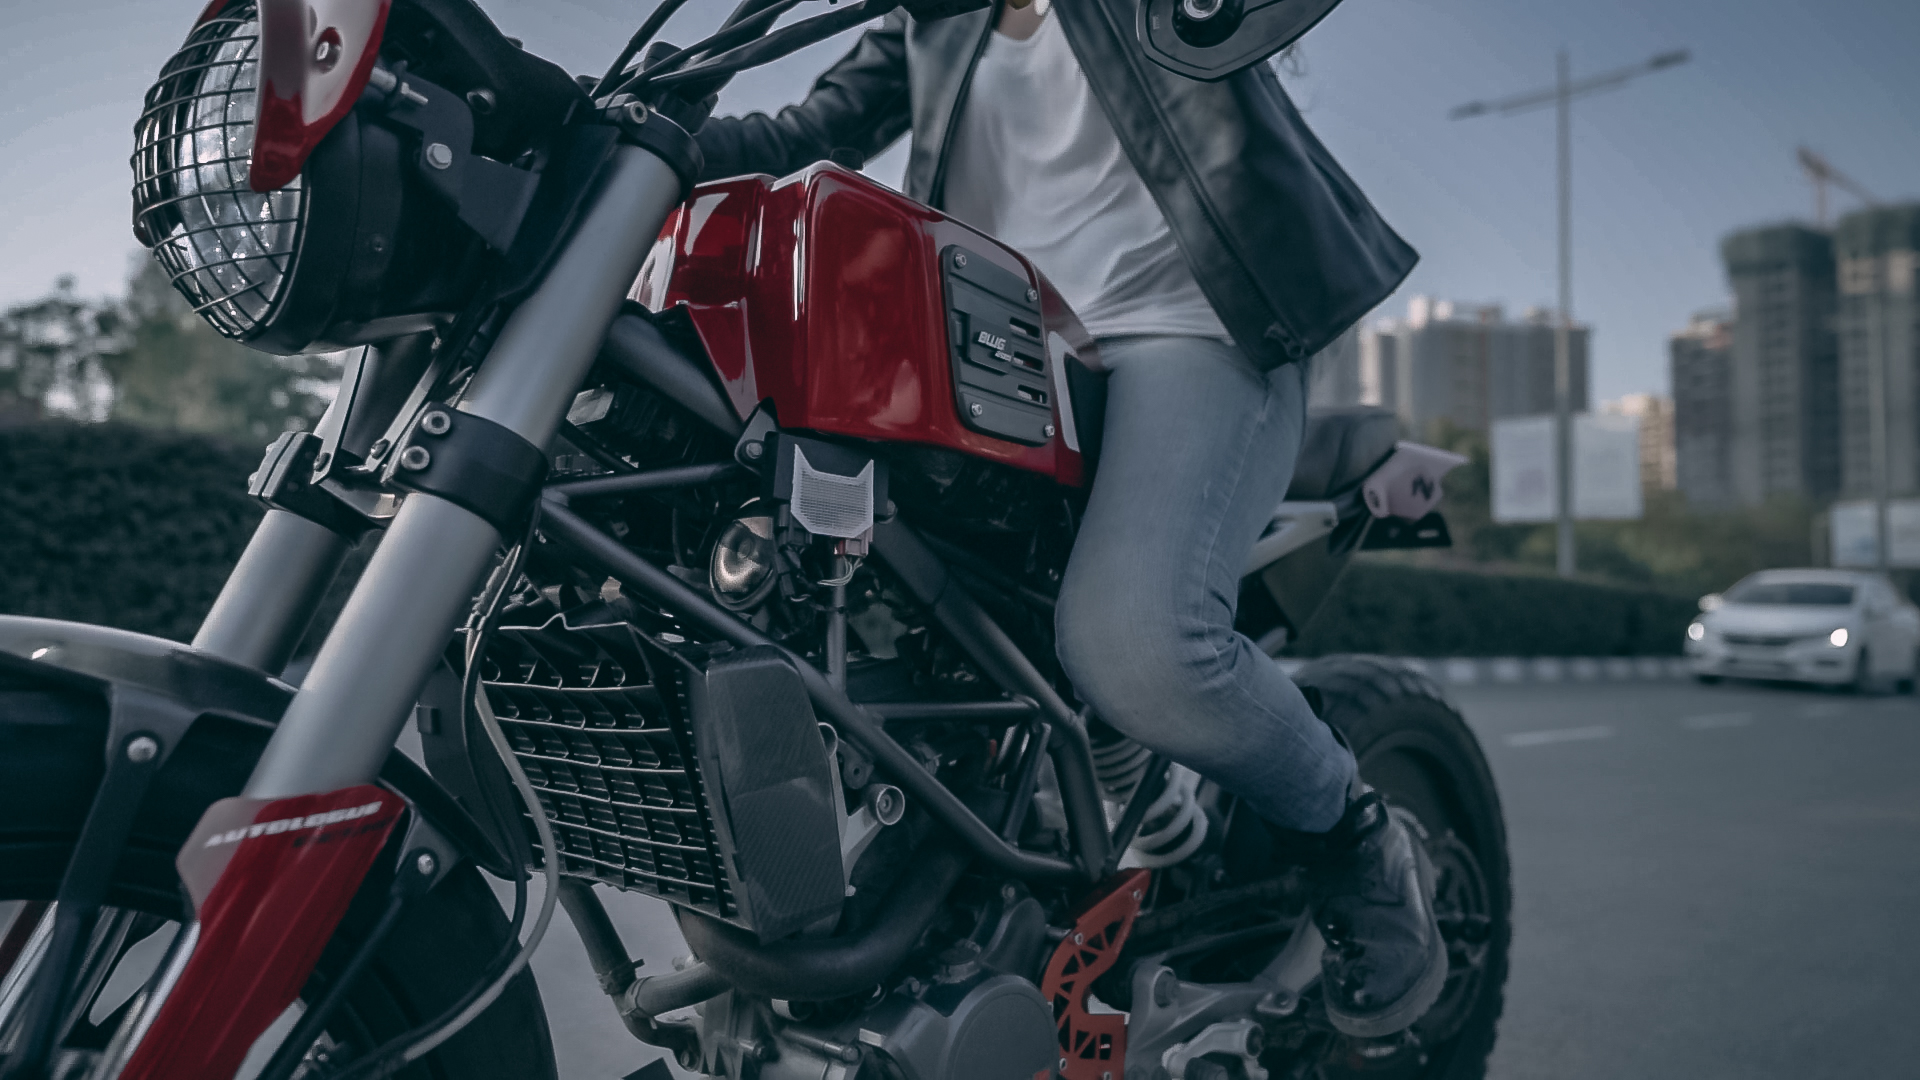 Meet 200cc KTM 'BikeWithGirl' Edition by Autologue Design - wide